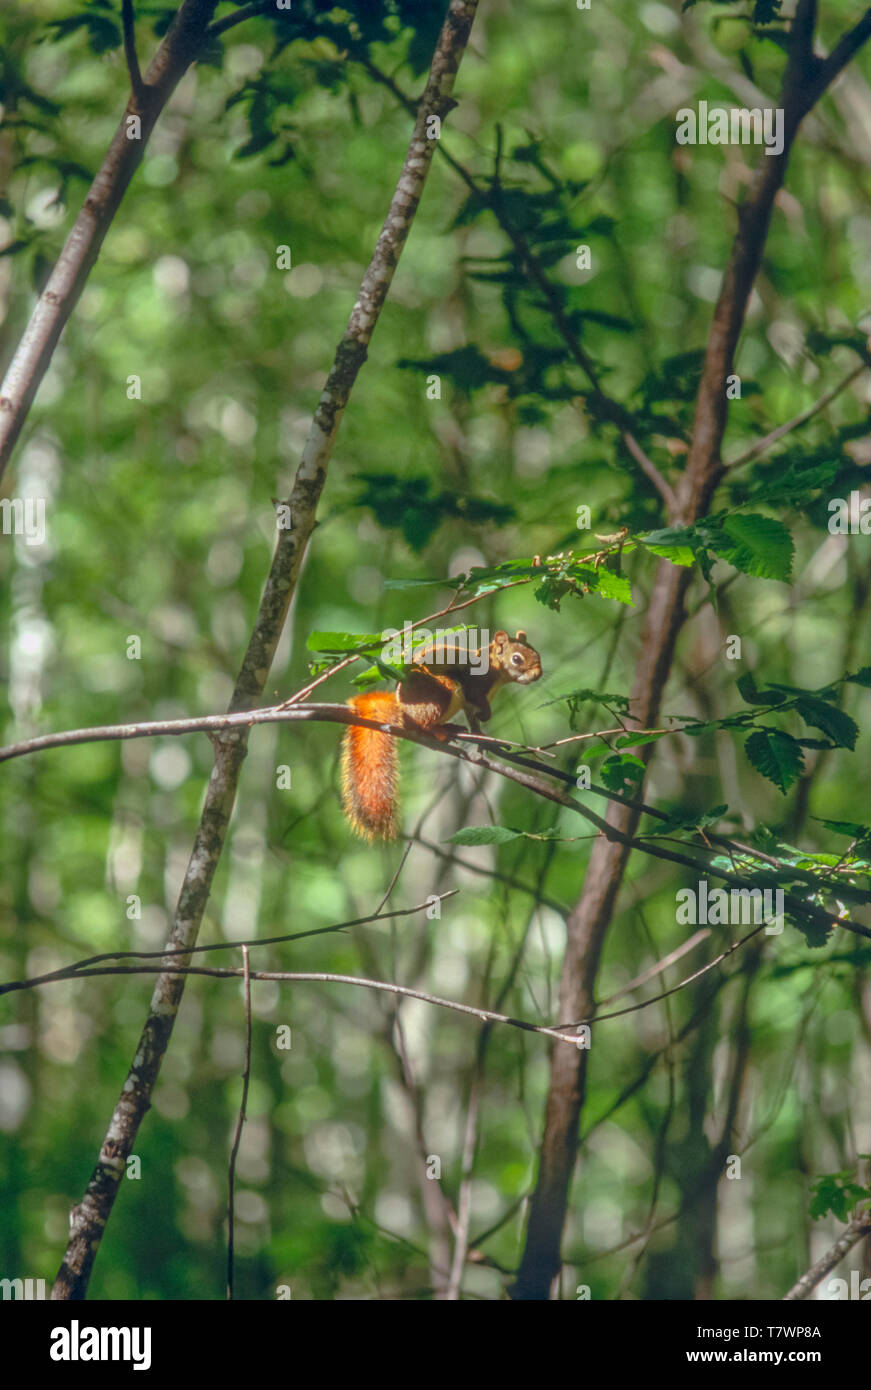 American red squirrel (Tamiasciurus hudsonicus) balancing on a thin branch of a Beech tree, Michigan upper peninsula near Munising Michigan US. June. Stock Photo